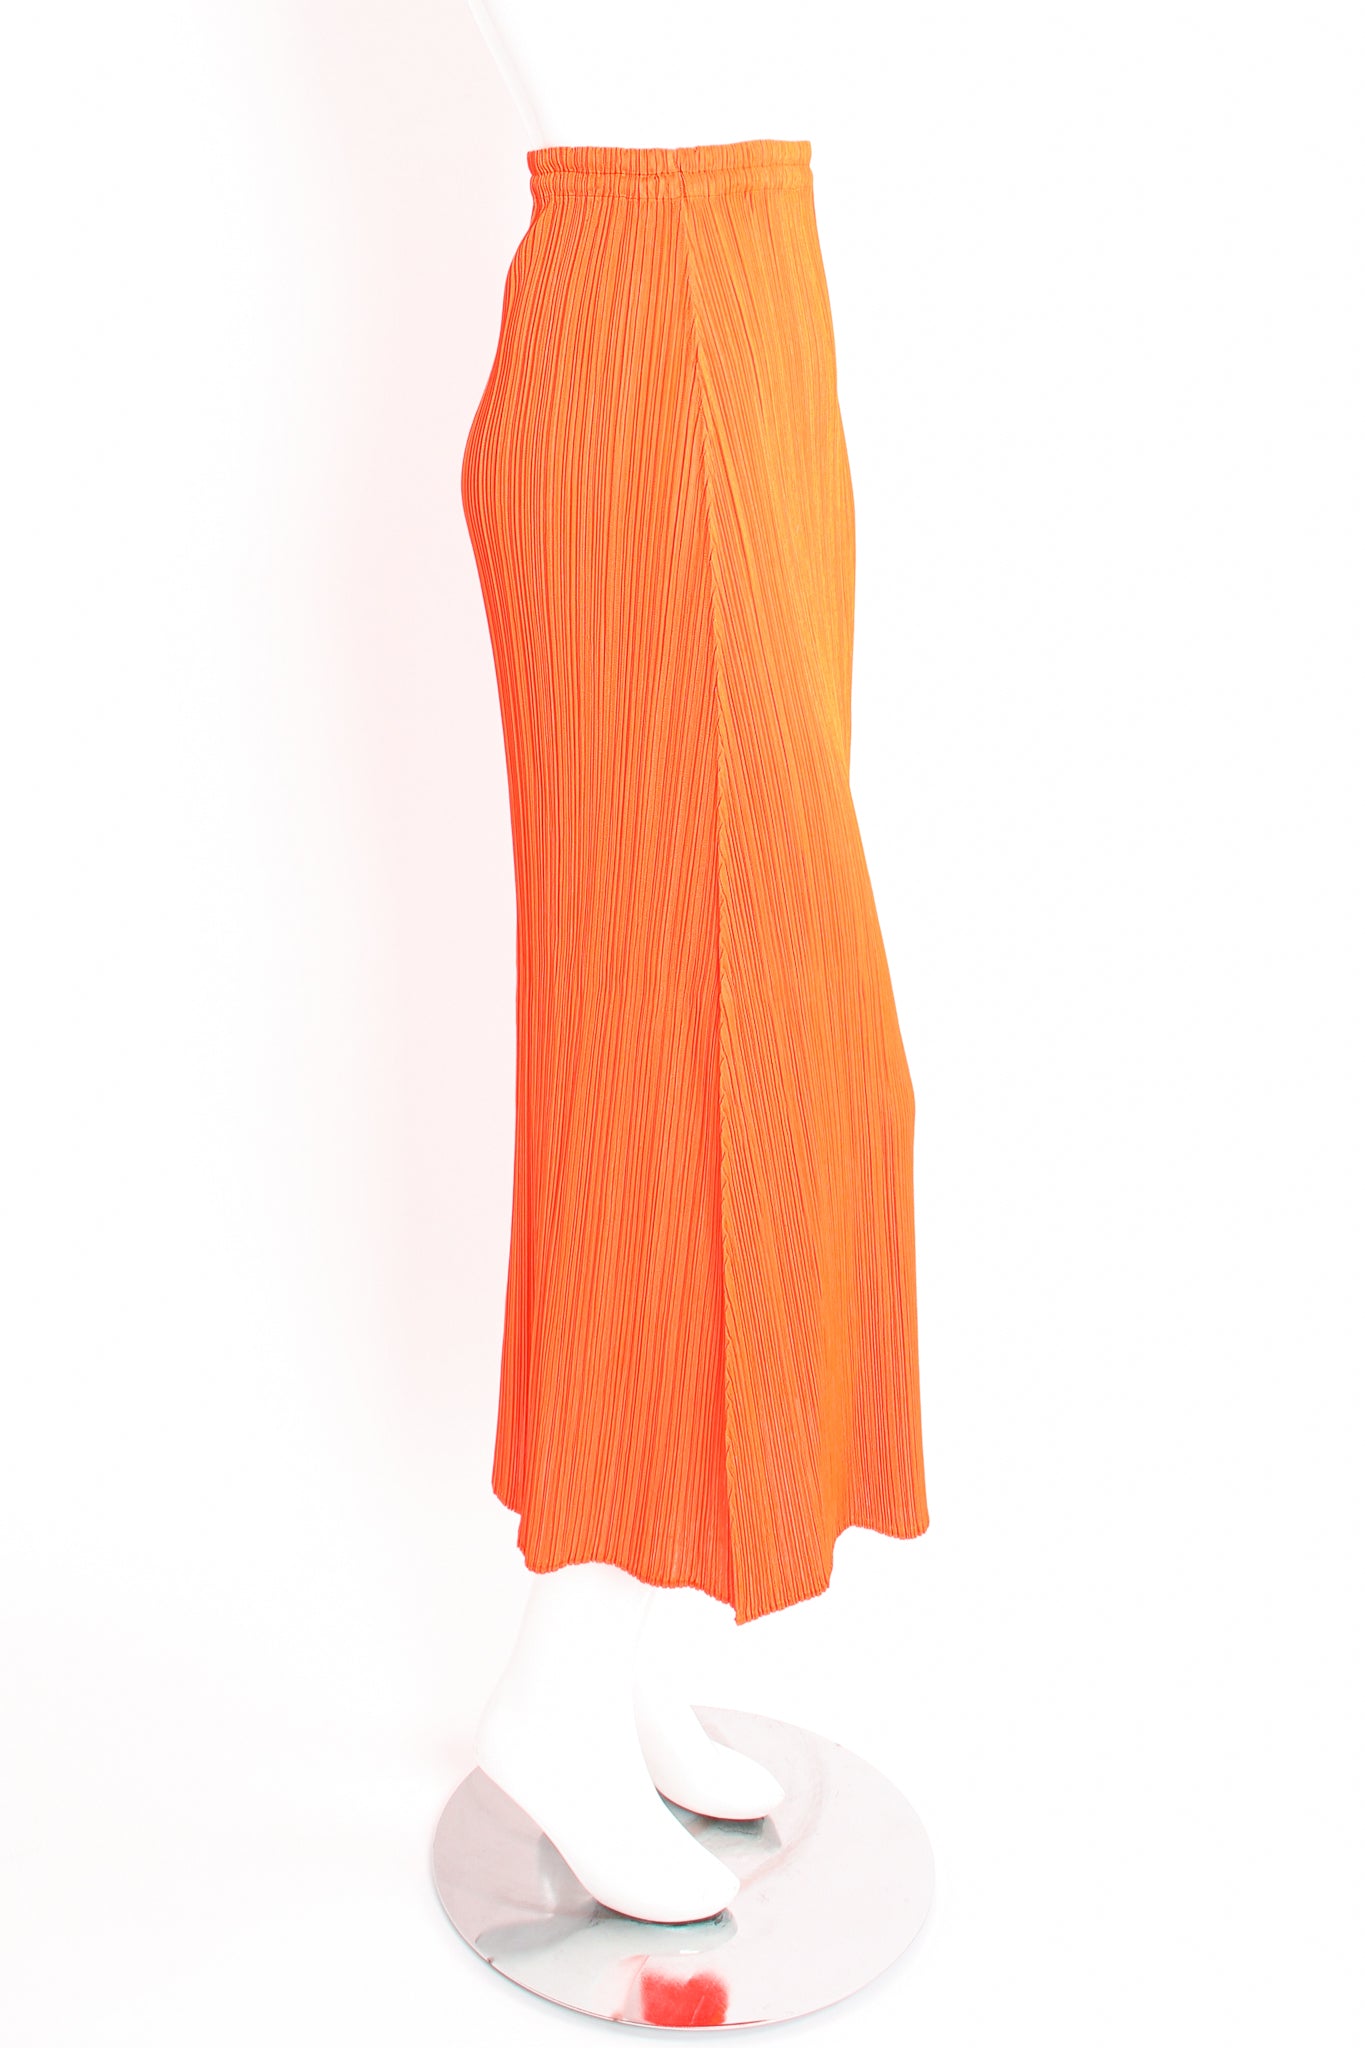 Vintage Issey Miyake Pleats Please Neon Duster & Skirt Set on Mannequin skirt side at Recess LA